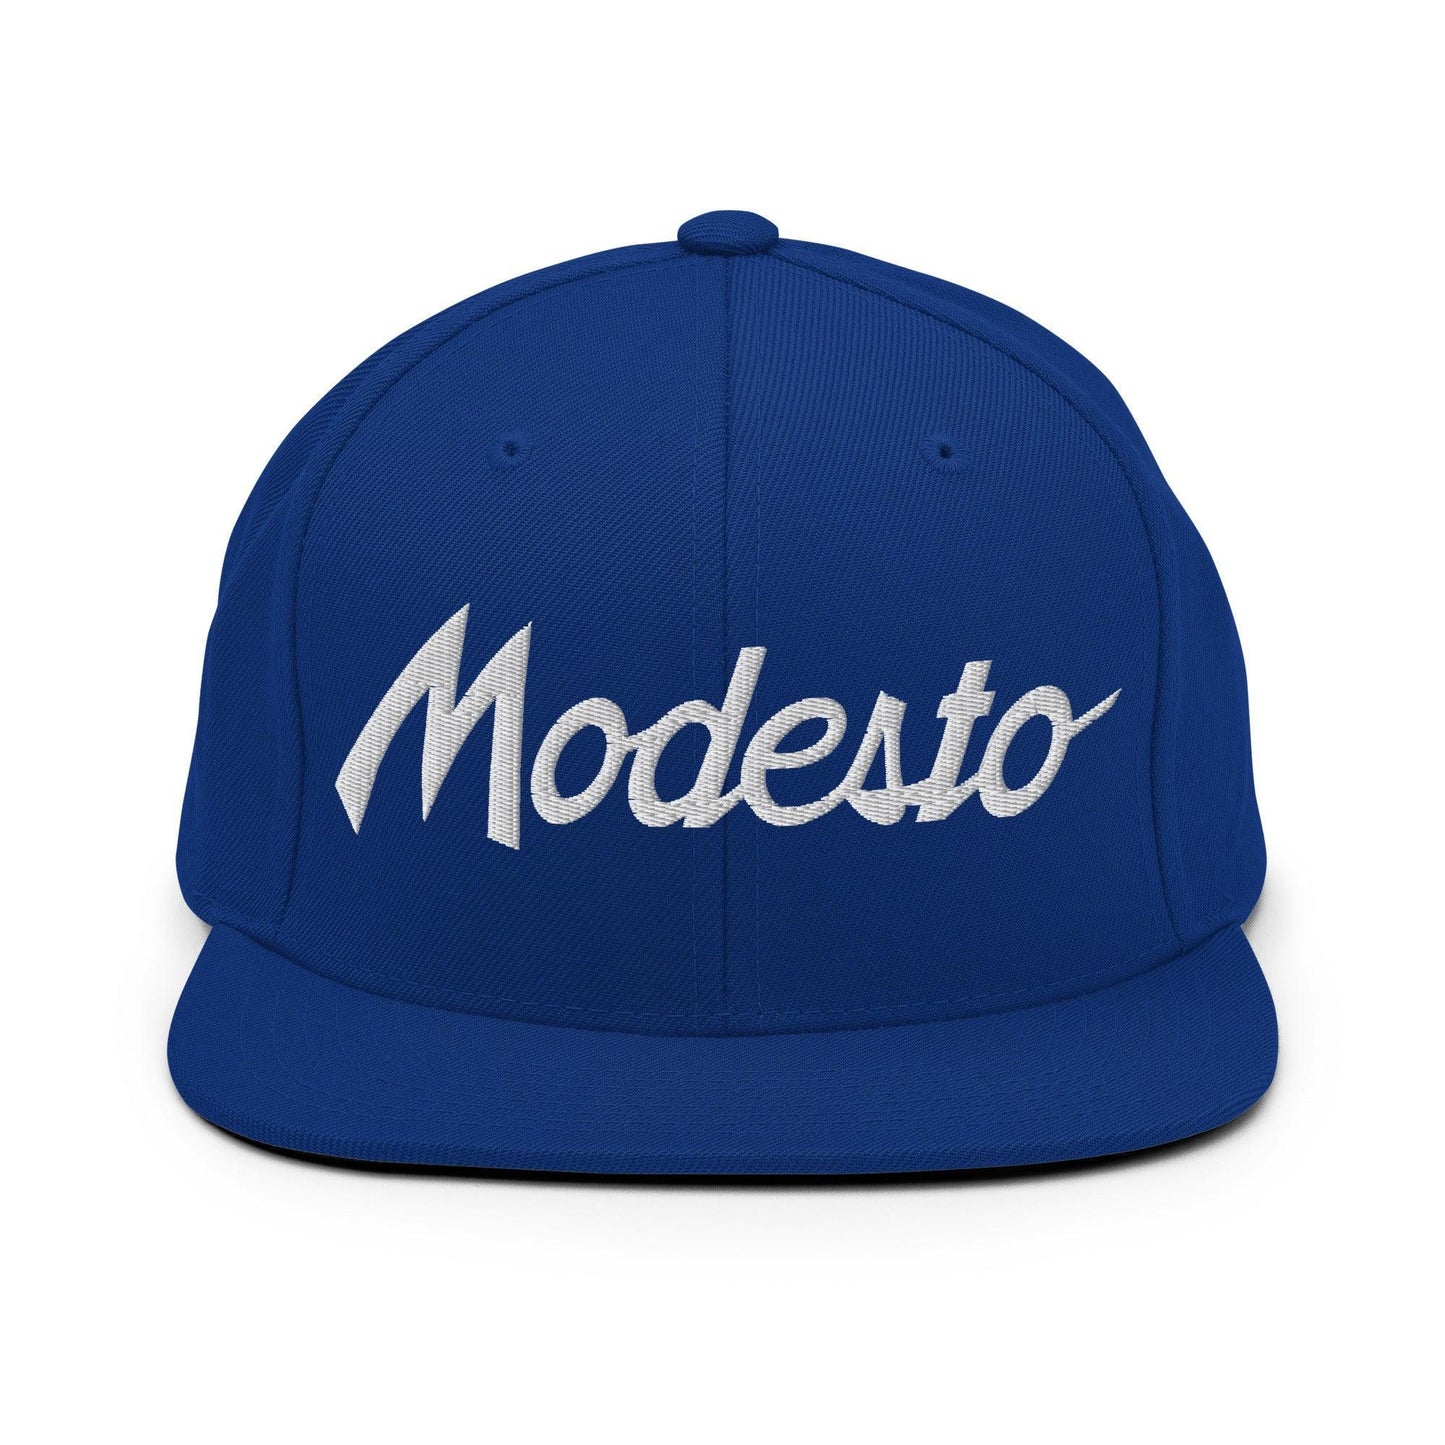 Modesto Script Snapback Hat Royal Blue